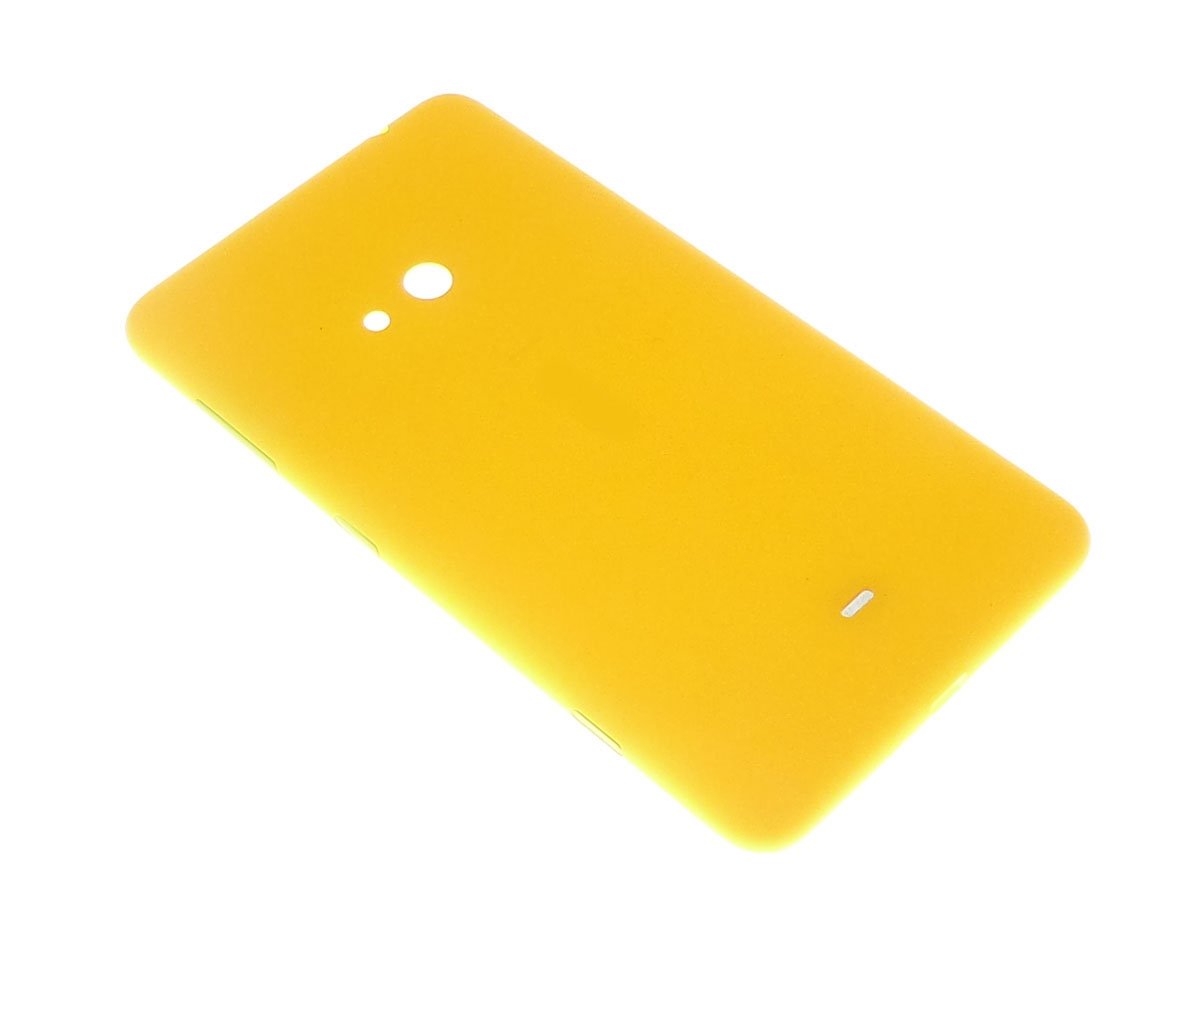 Cache yellow rear battery for Nokia Lumia 625